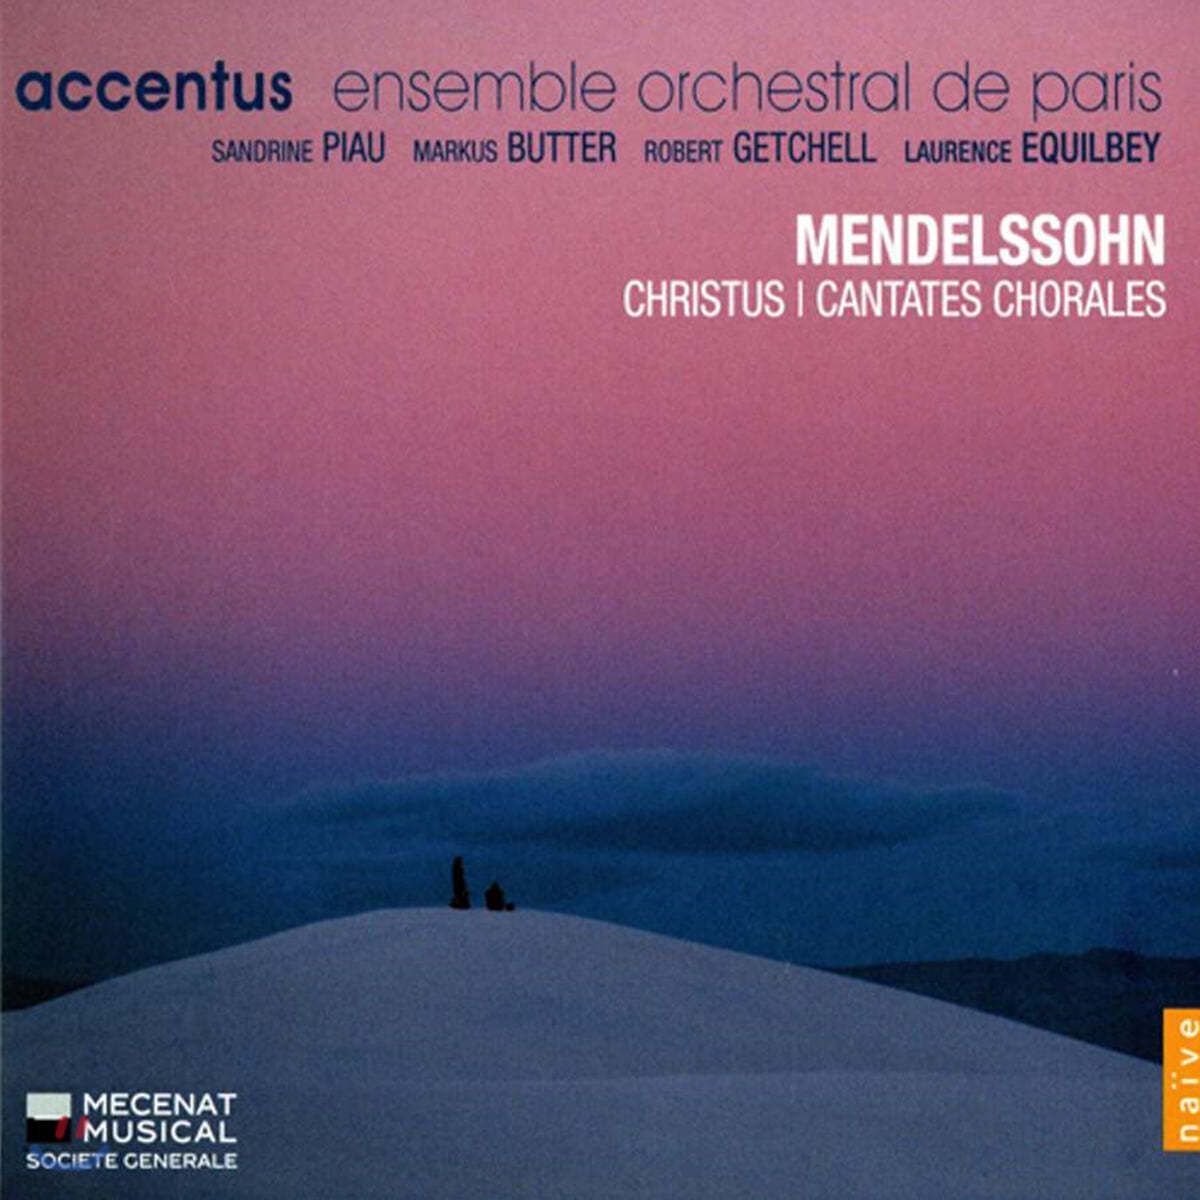 Sandrine Piau 멘델스존: 합창 칸타타 (Mendelssohn: Christus and Cantates Chorales)